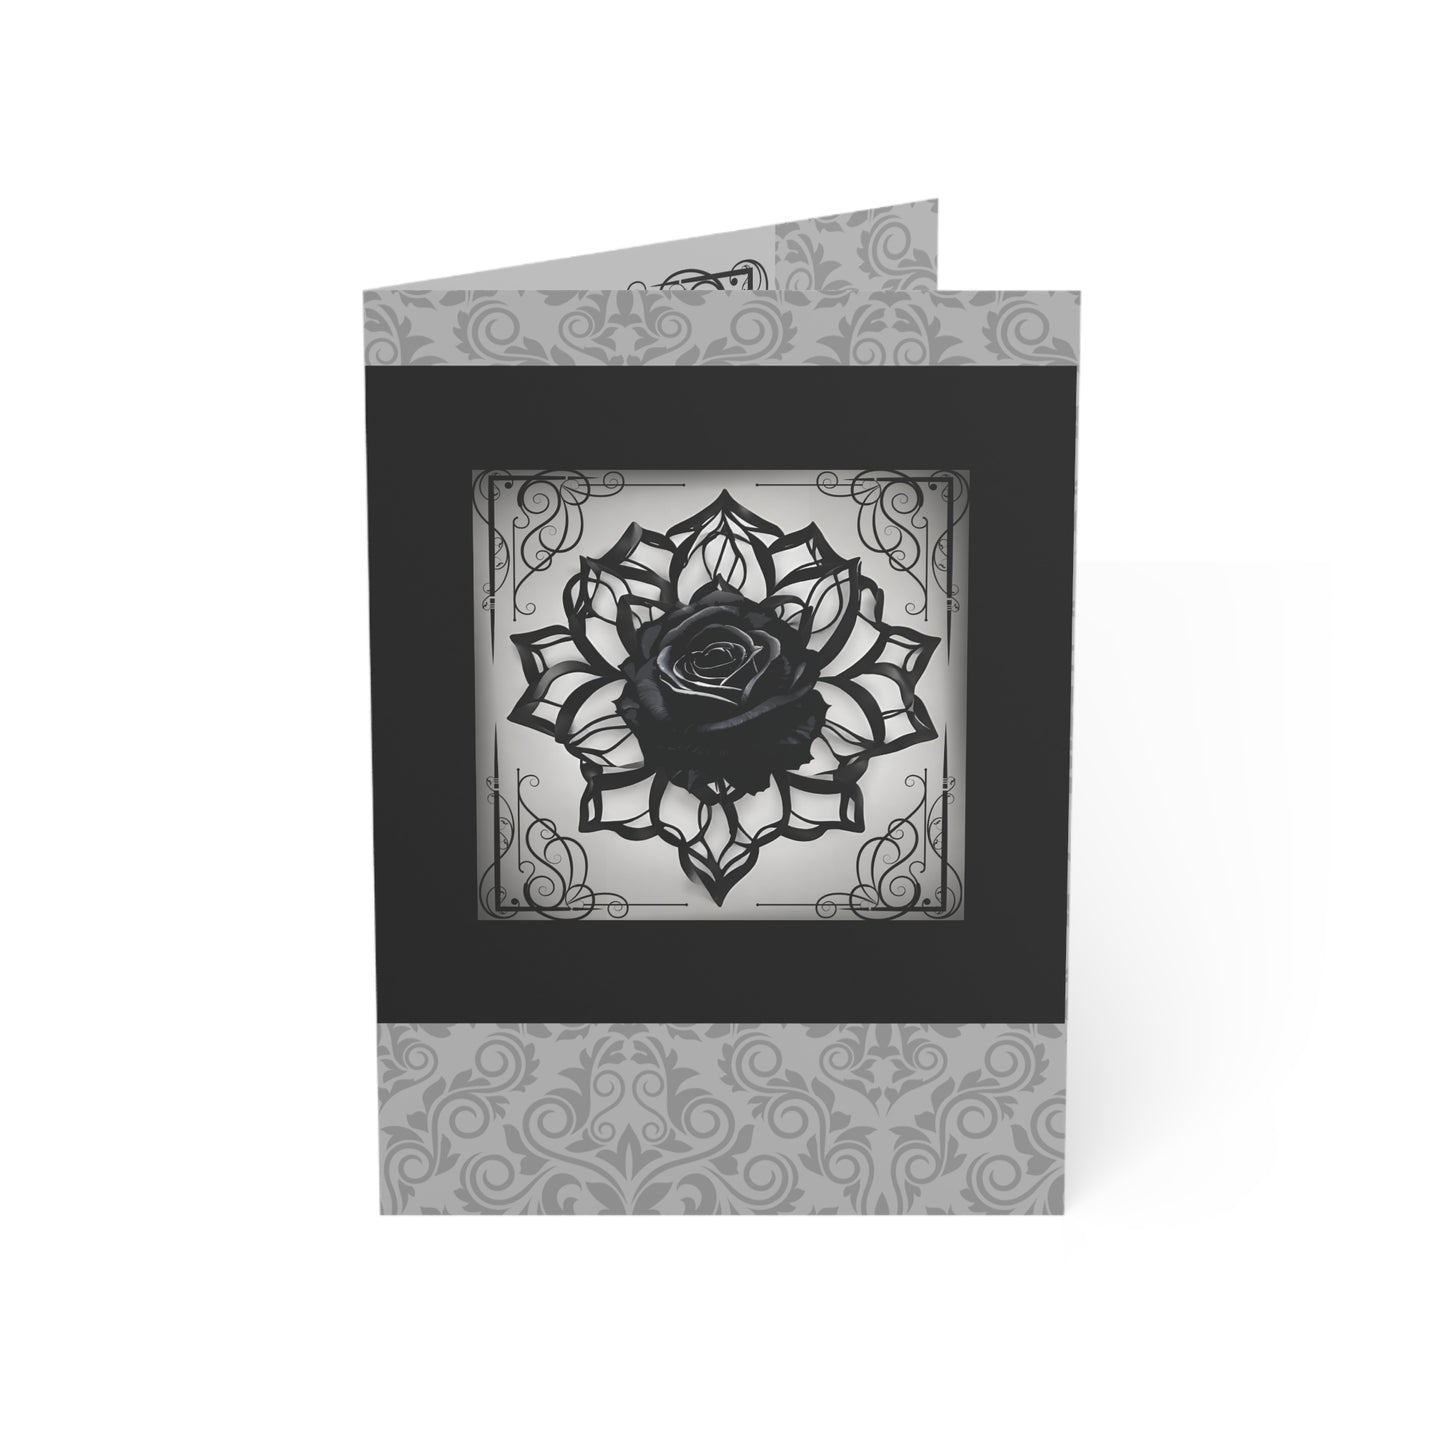 Sinister Rose Greeting Cards |  (1 pcs)